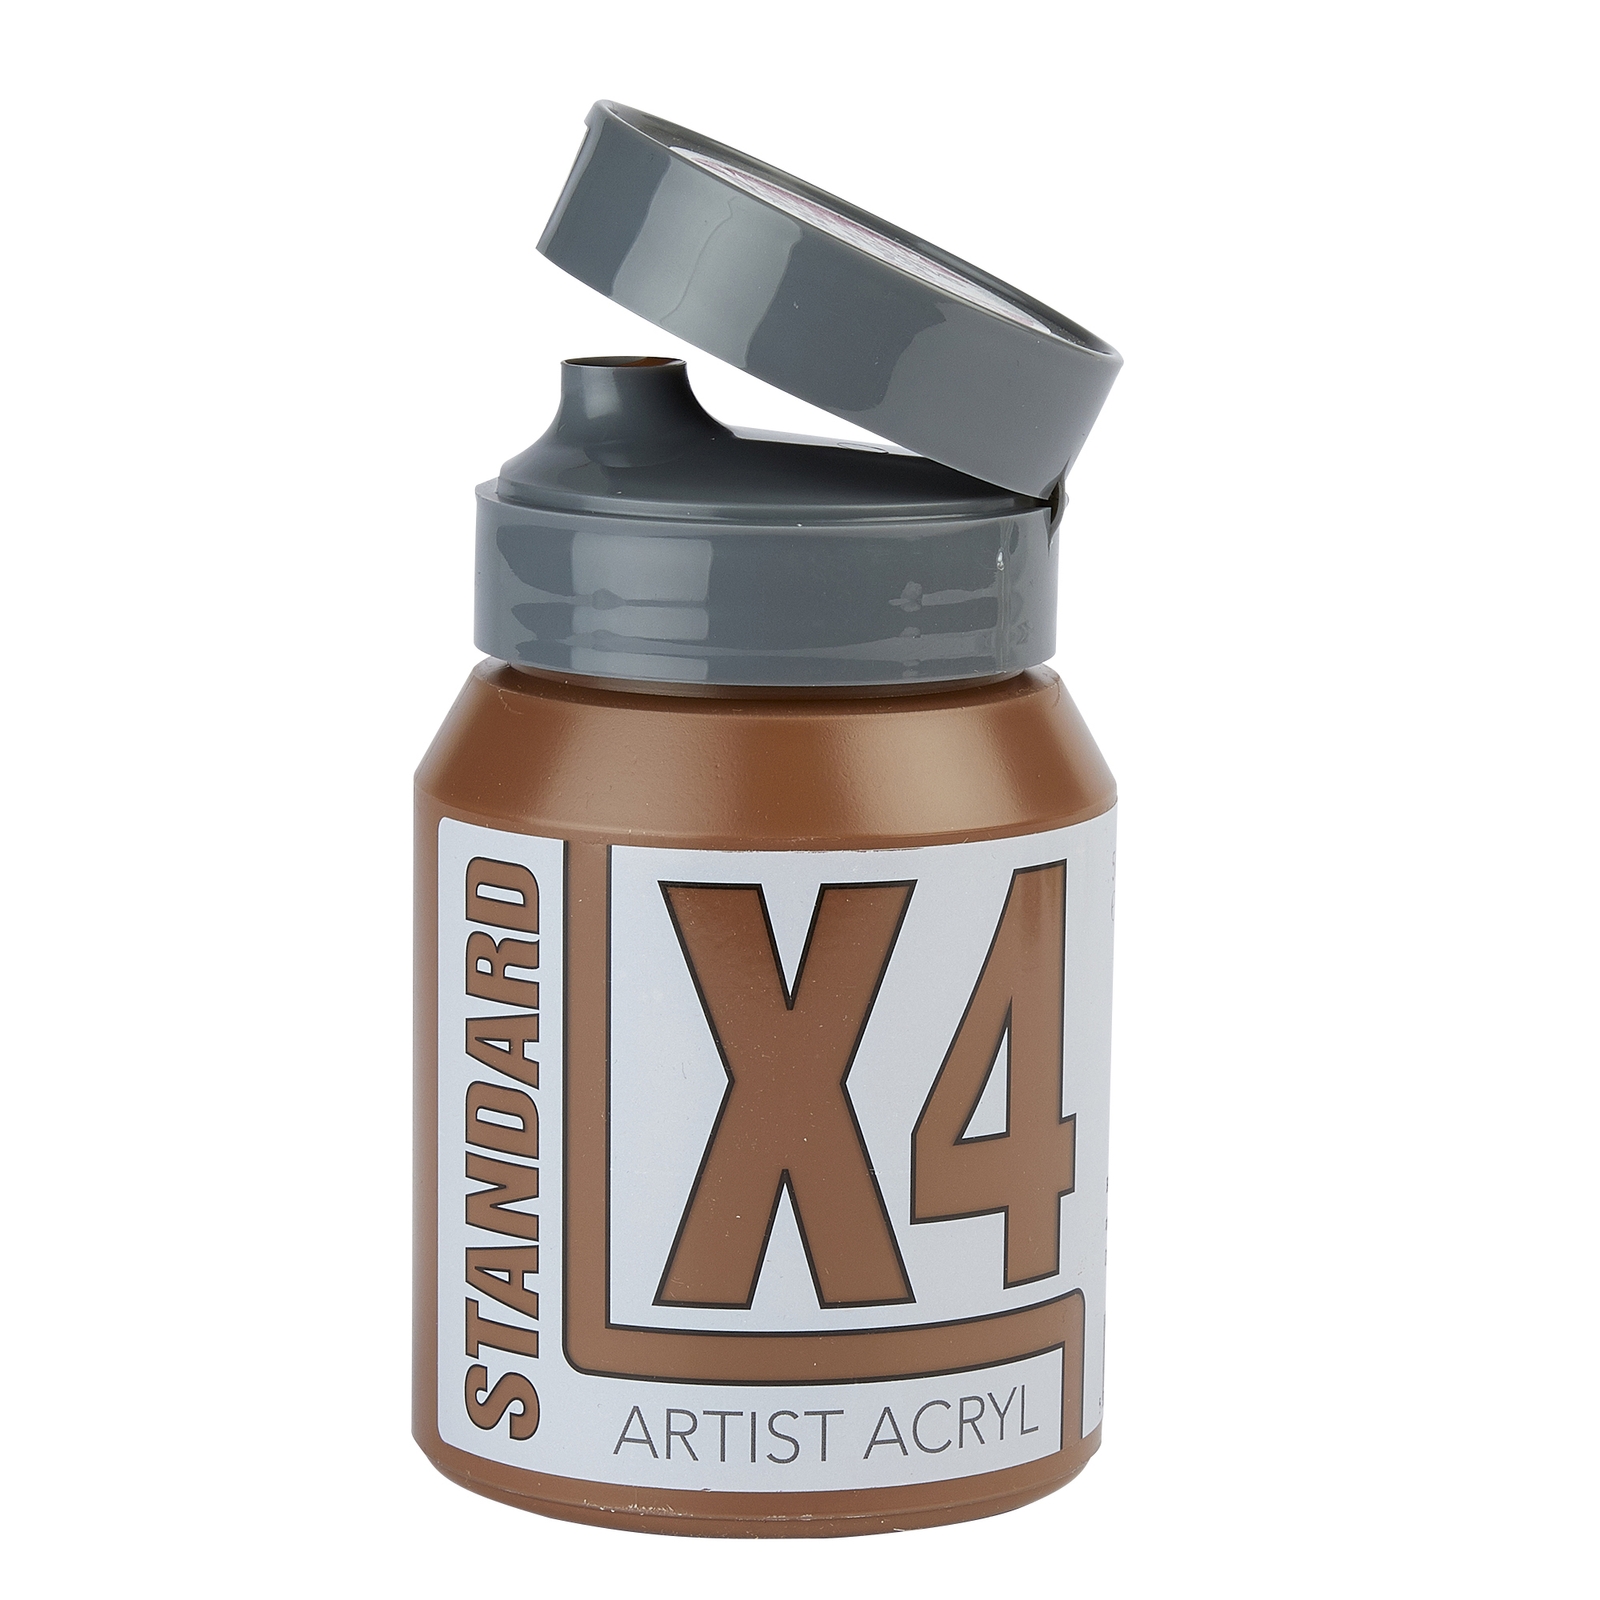 Specialist Crafts X4 Standard Burnt Umber Acryl/Acrylic Paint - 500ml - Each